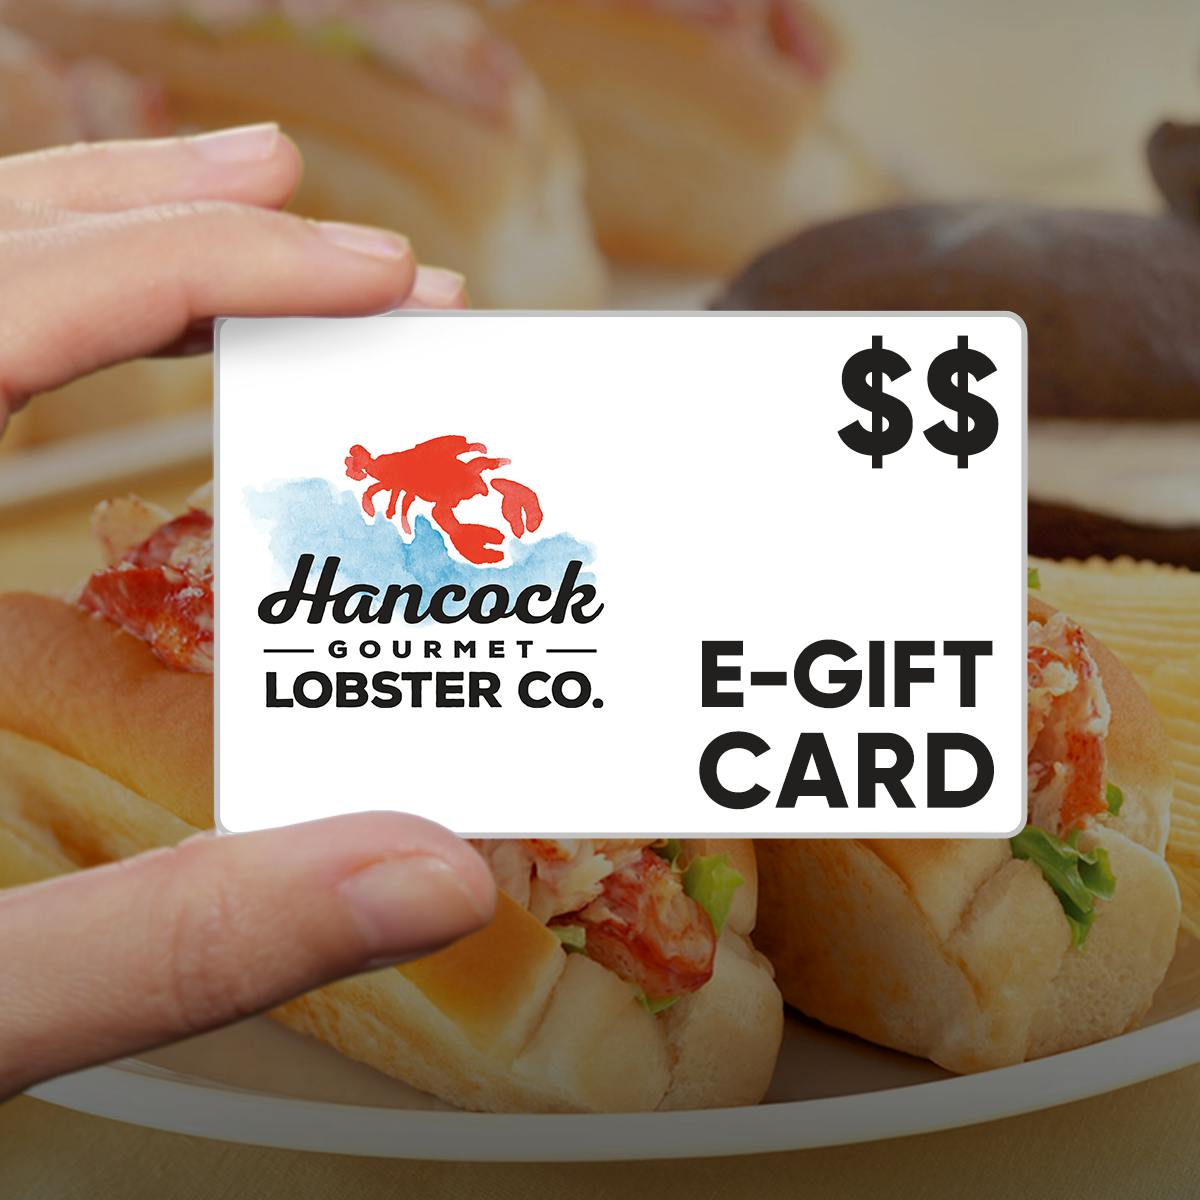 EGift Card by Hancock Gourmet Lobster Co. Goldbelly